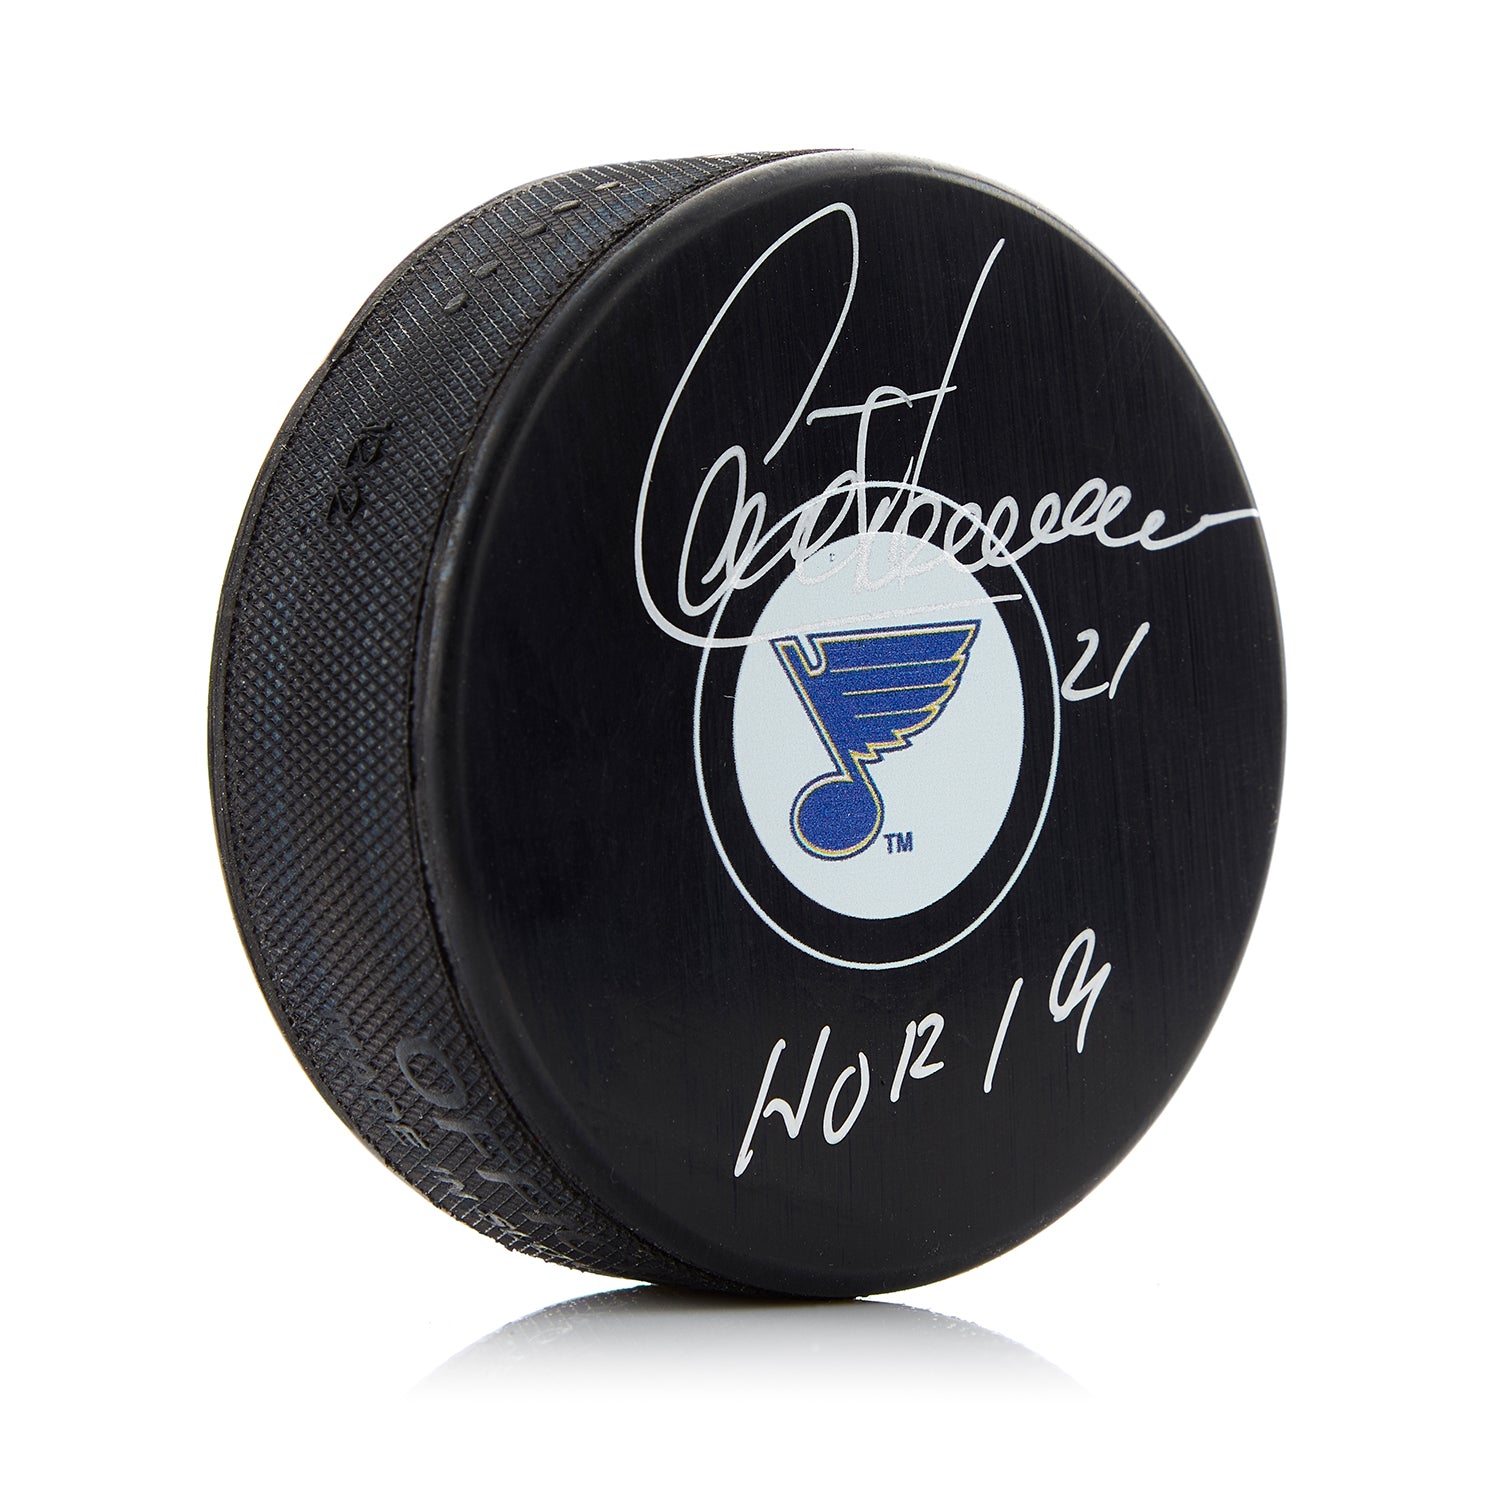 Guy Carbonneau St Louis Blues Signed Autograph Hockey Puck with HOF 19 Note